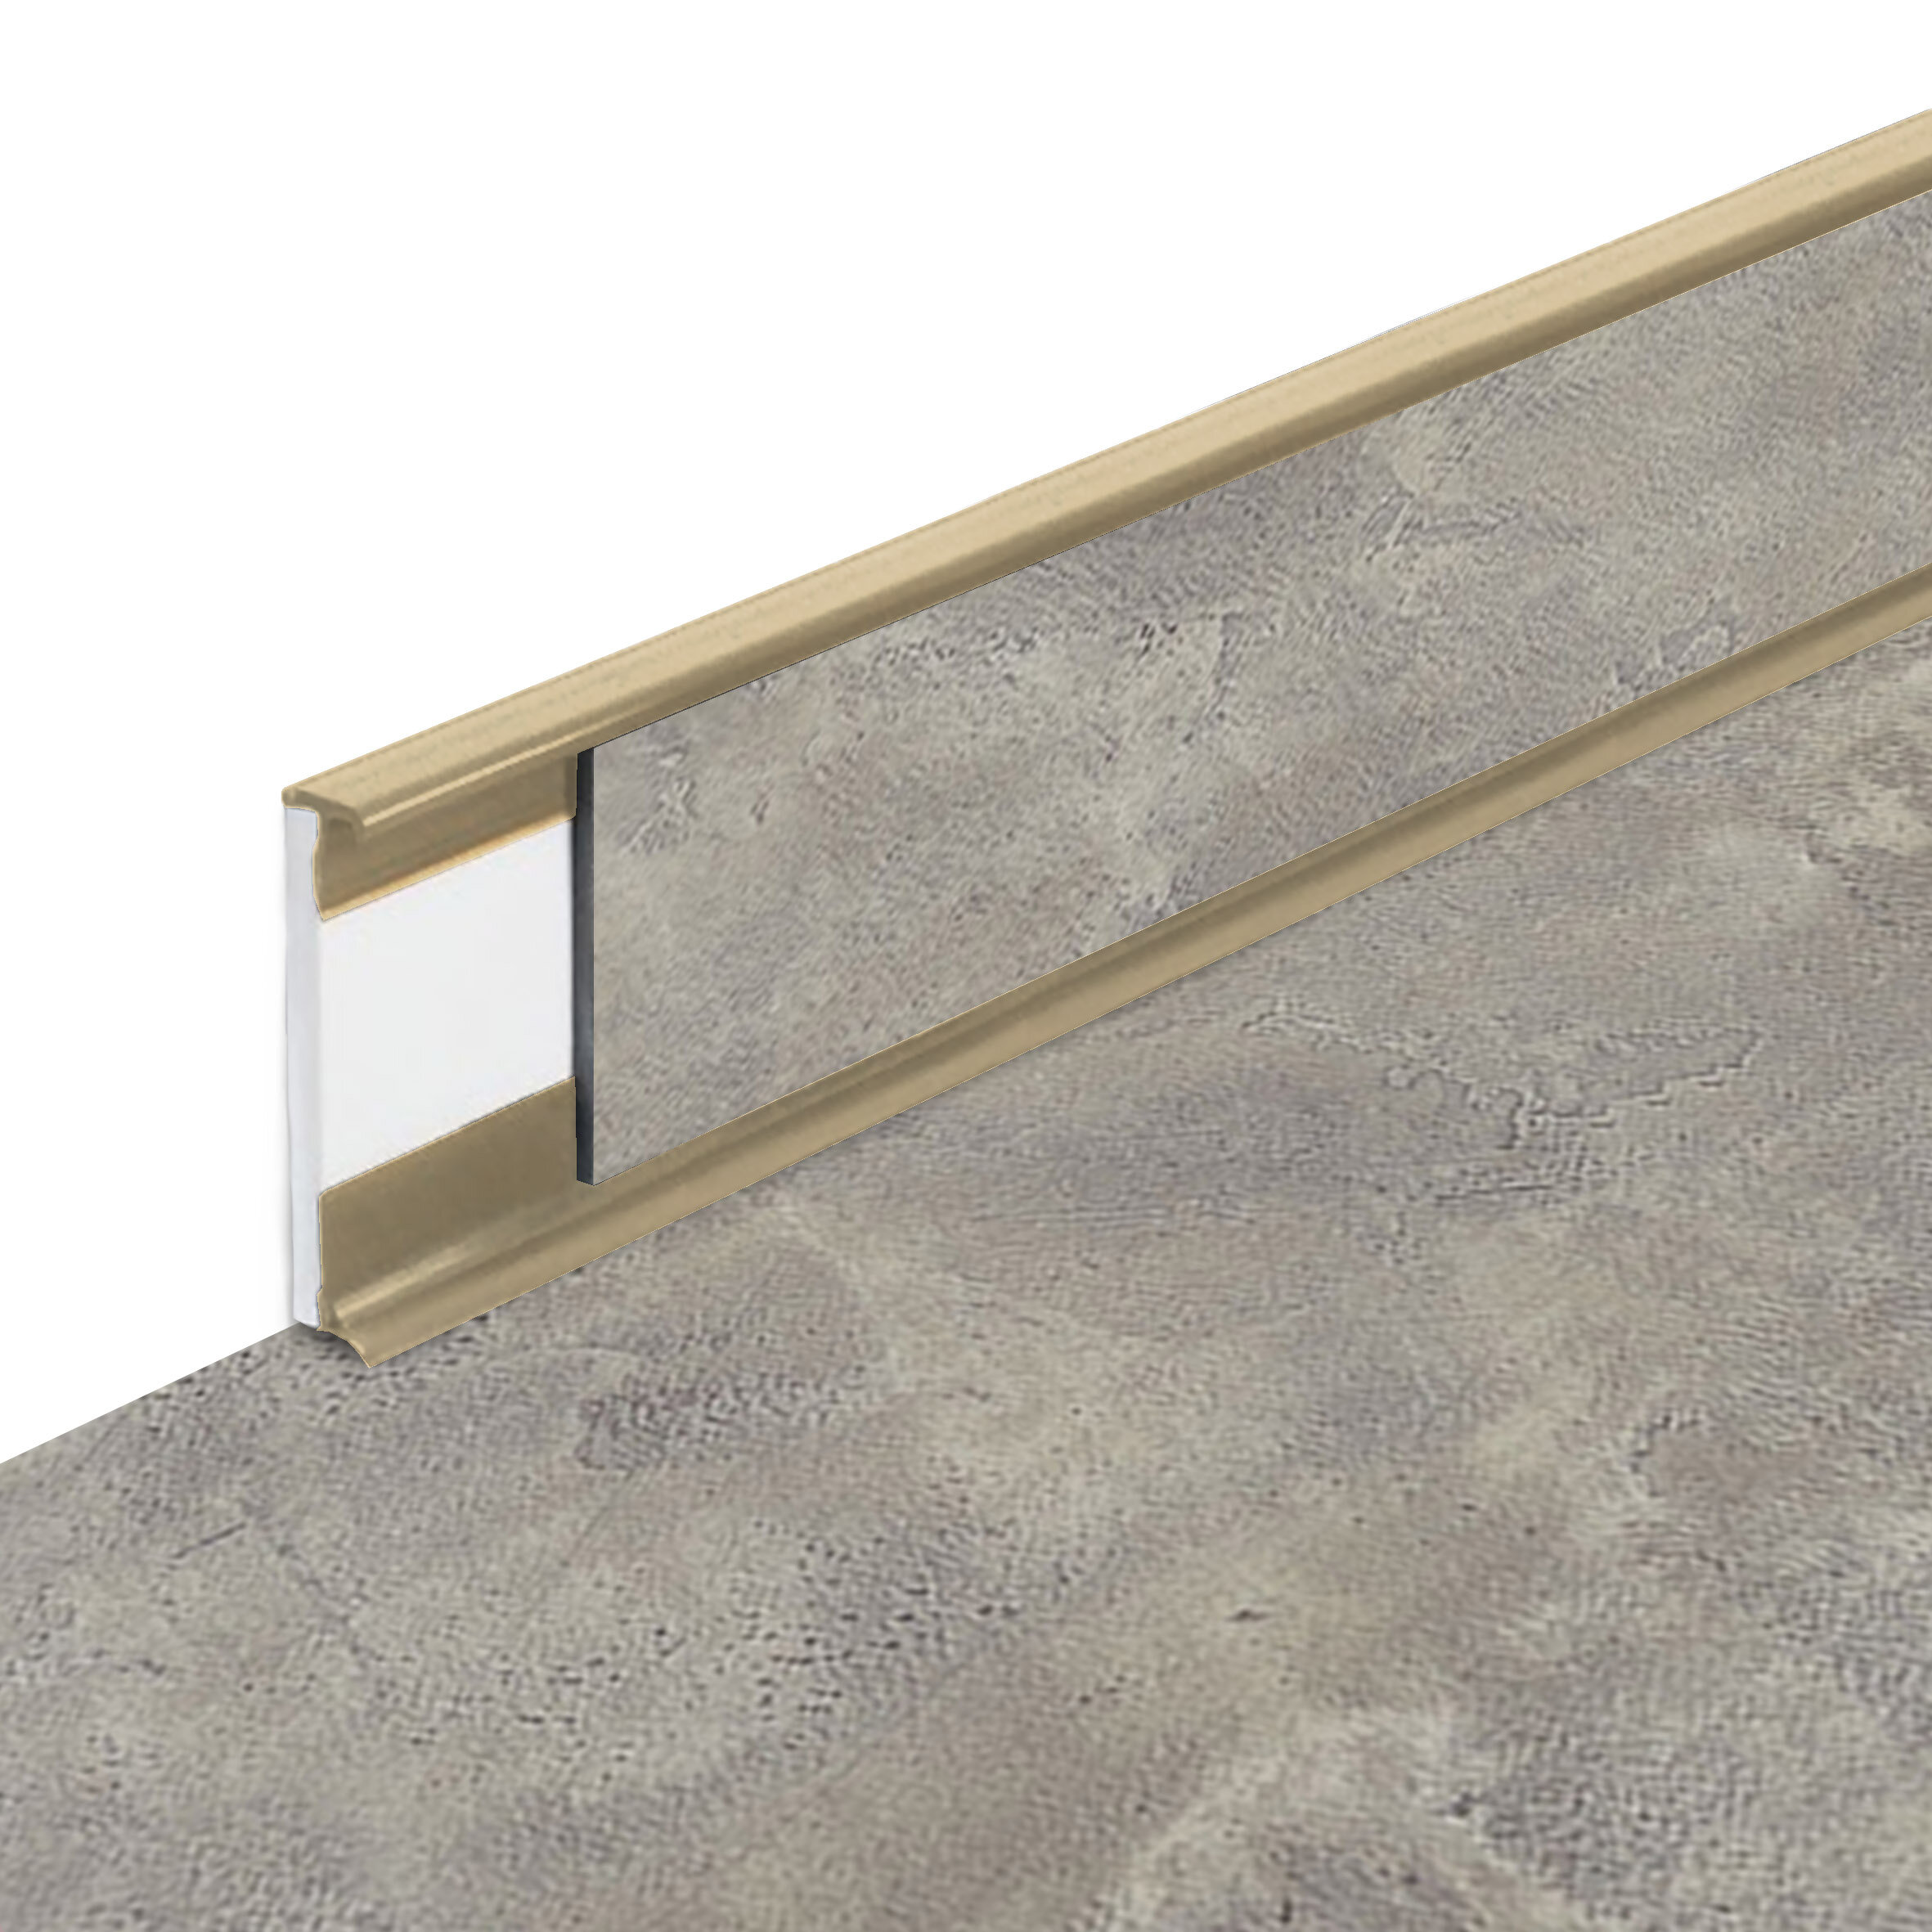 PVC vinylová soklová podlahová lišta Fortelock Business Forsen grey clay C022 beige - délka 200 cm, výška 5,8 cm, tloušťka 1,2 cm